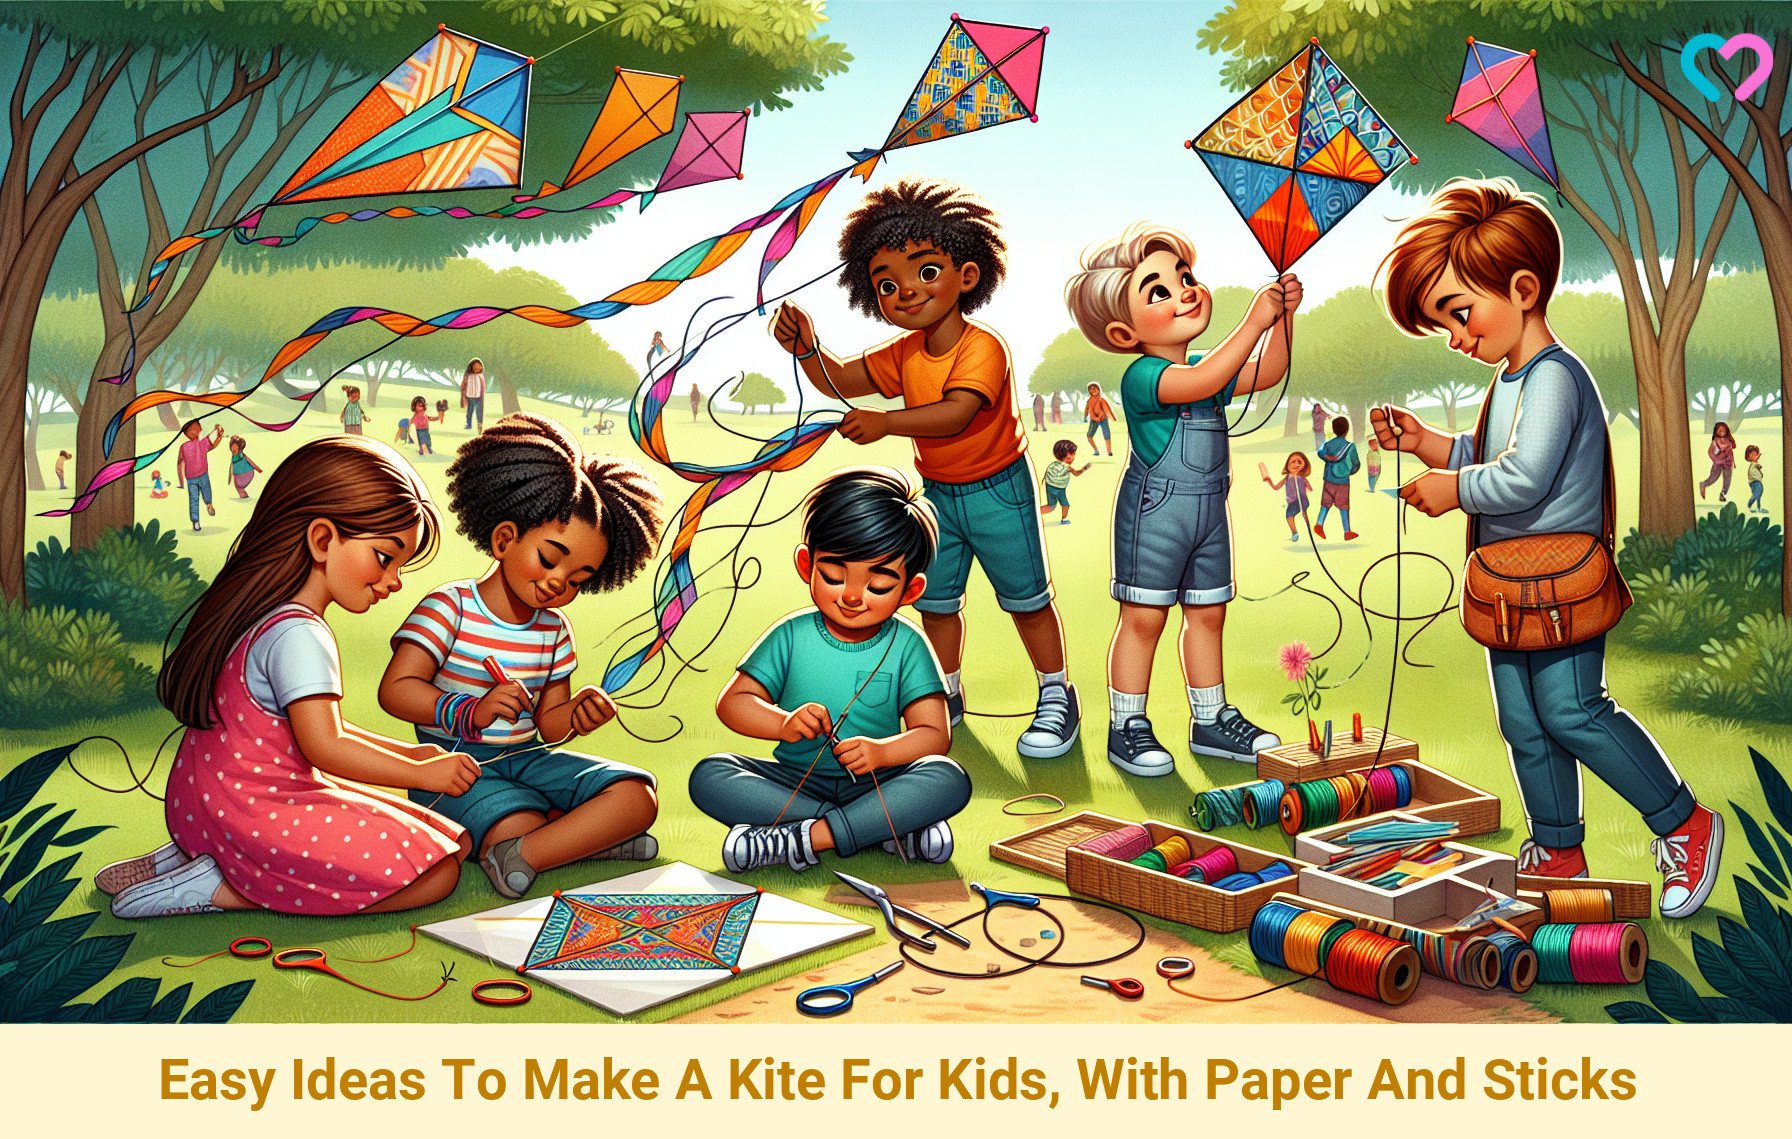 How To Make A Kite For kids_illustration